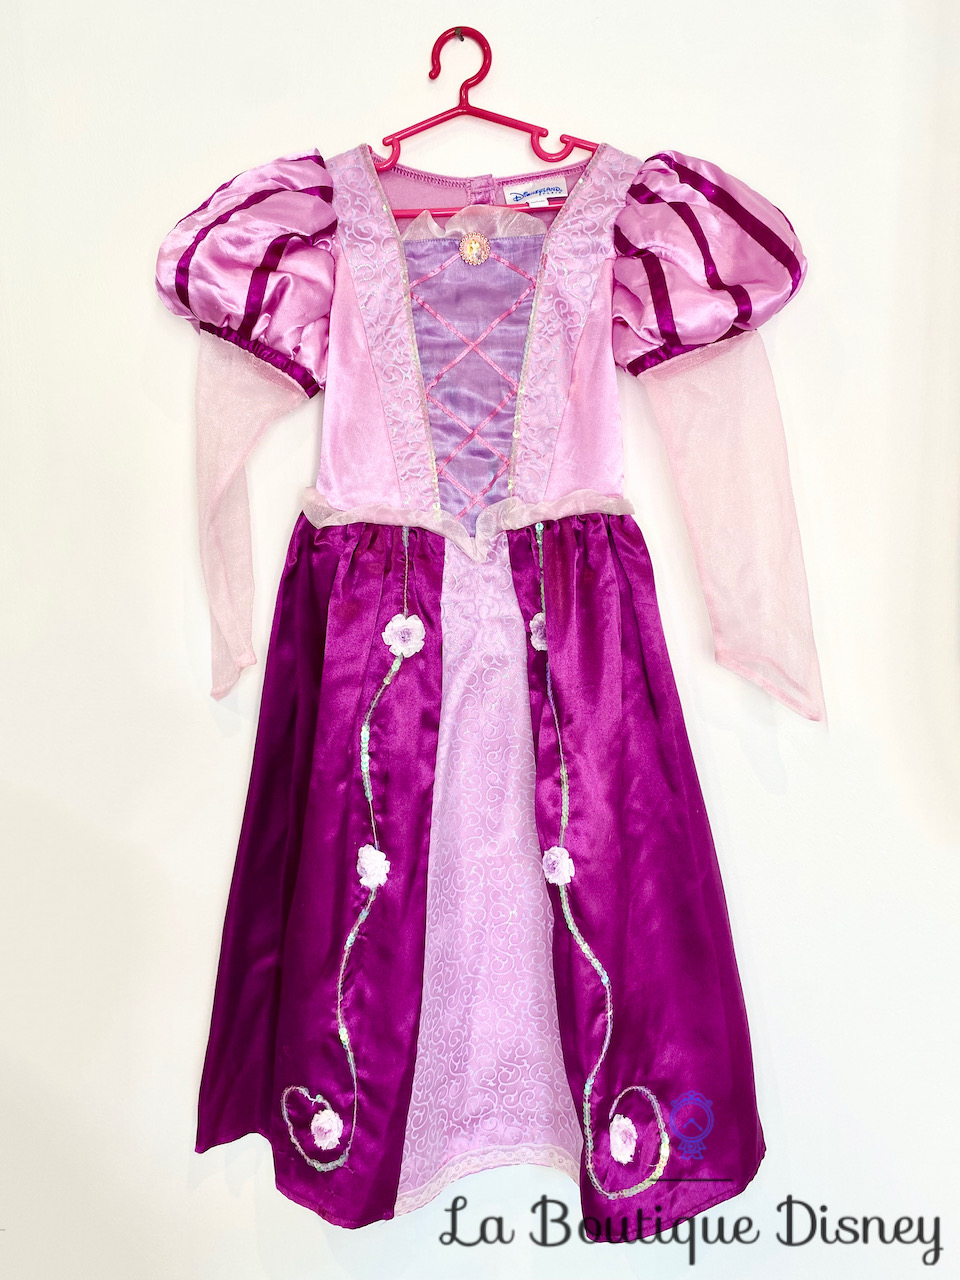 https://media.cdnws.com/_i/285672/21595/1671/95/deguisement-raiponce-disneyland-disney-taille-8-ans-robe-princesse-violet-rose-fleurs-4.jpeg